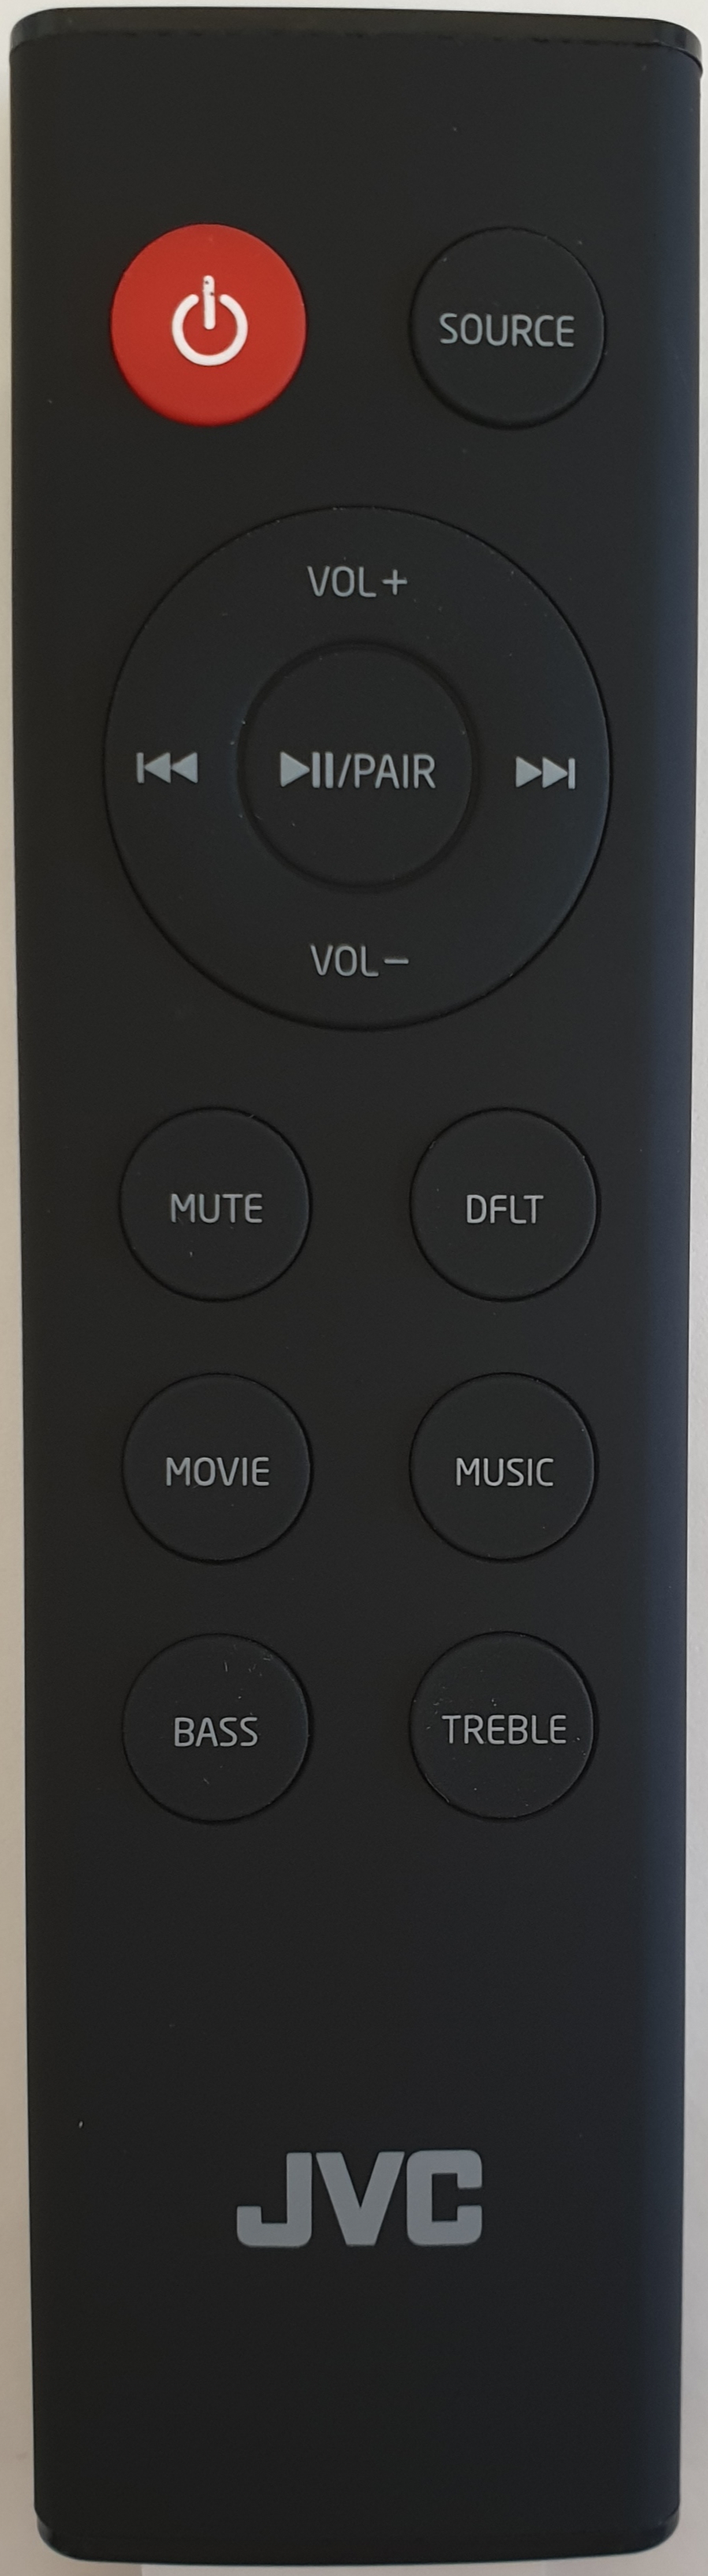 JVC TH-D337B Remote Control Original 